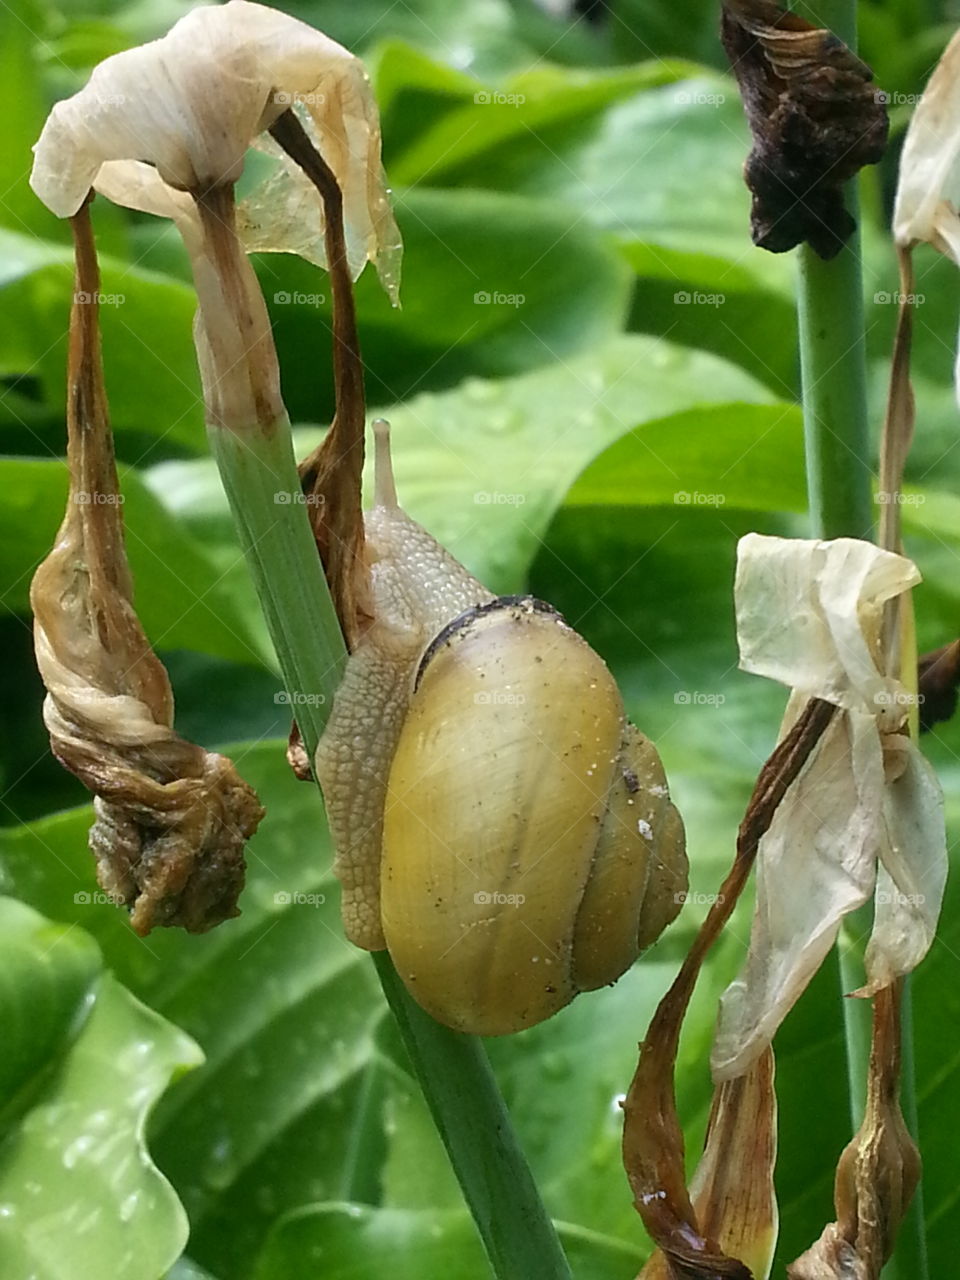 garden snail. a snail climbing a plant